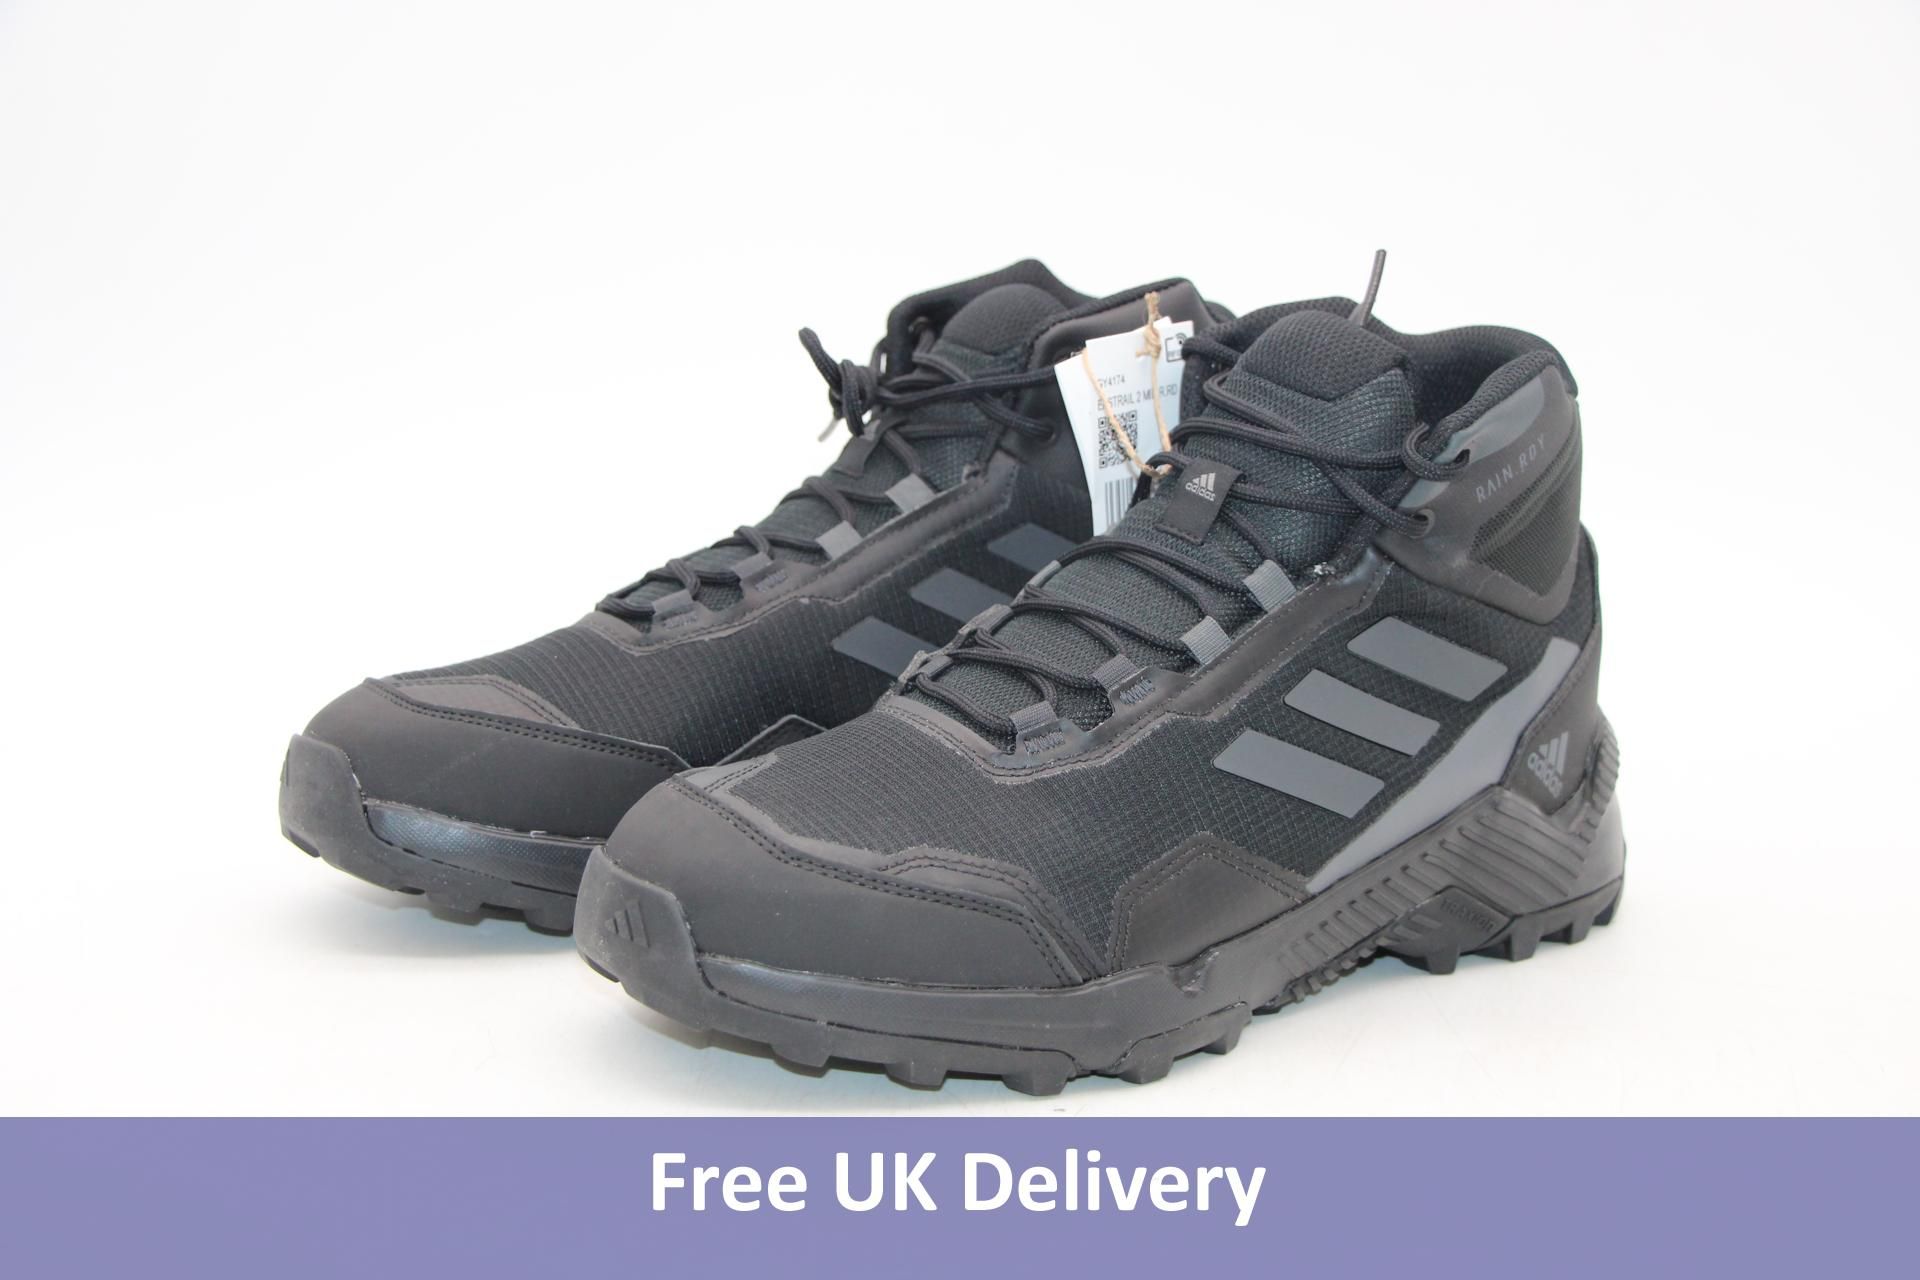 Adidas Men's Eastrail 2.0 Mid Hiking Shoes, Black, UK 10.5, No Box